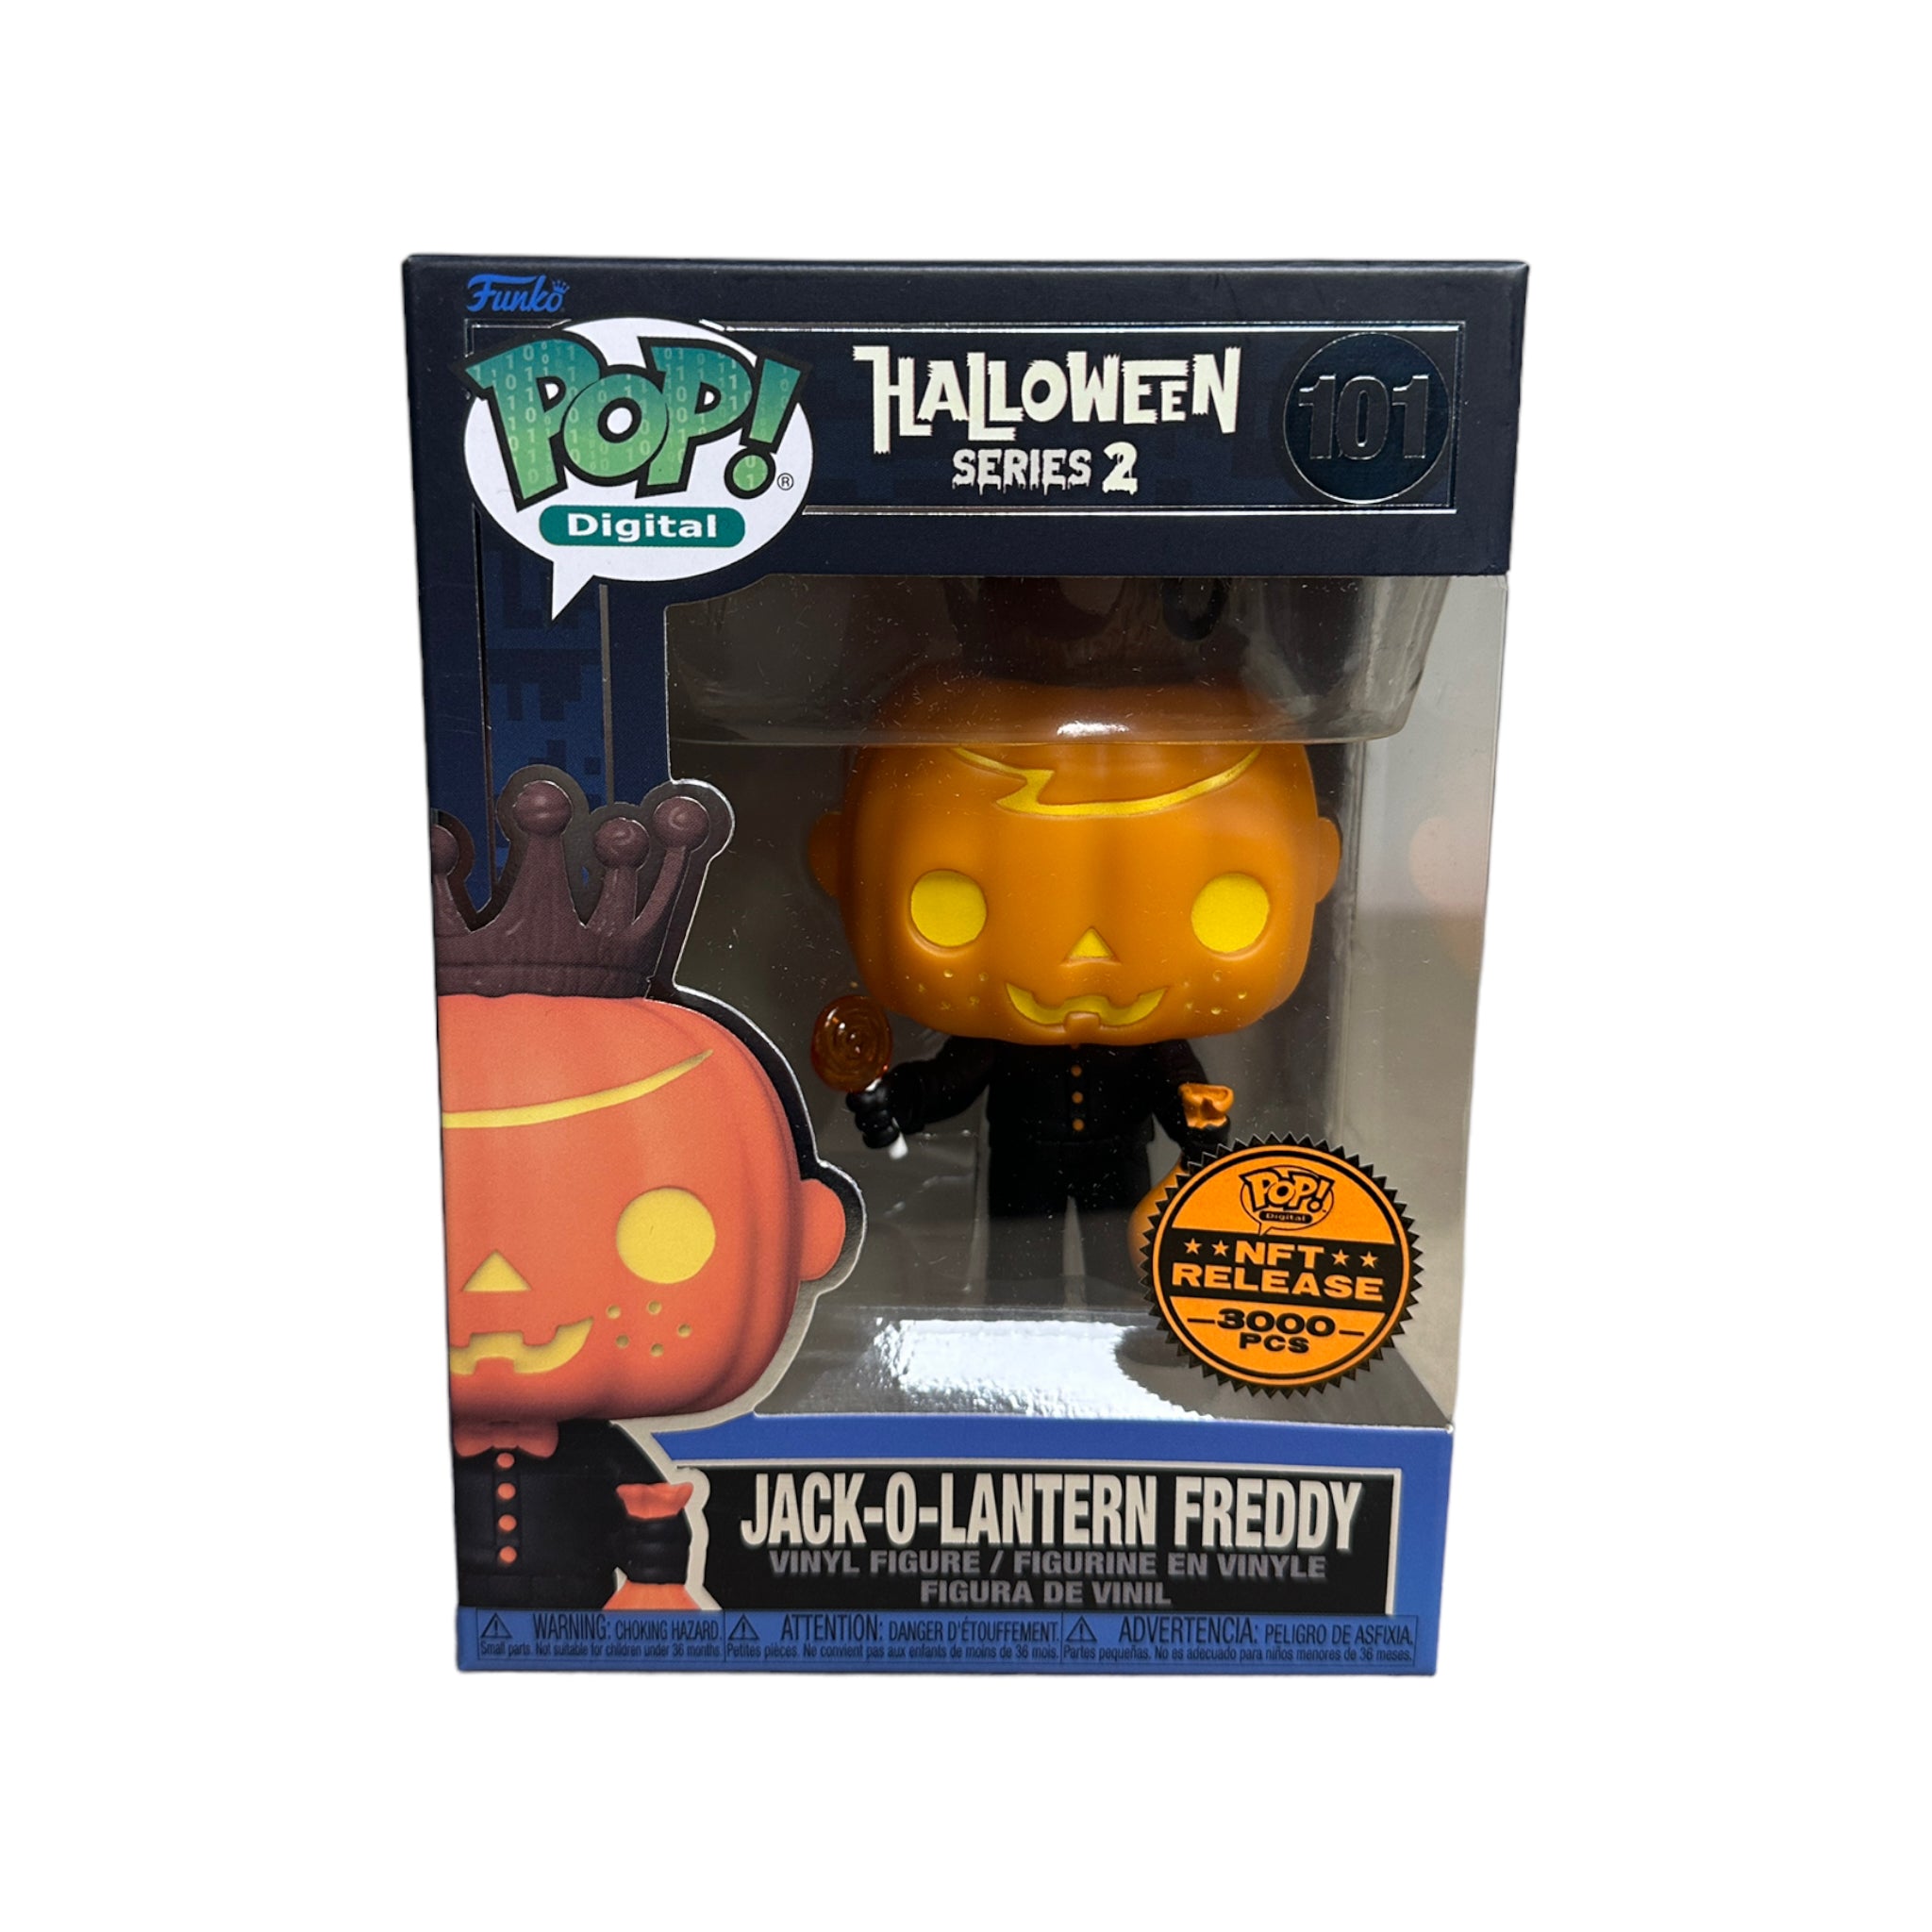 Jack-O-Lantern Freddy #101 Funko Pop! - Halloween Series 2 - NFT Release Exclusive LE3000 Pcs - Condition 9/10